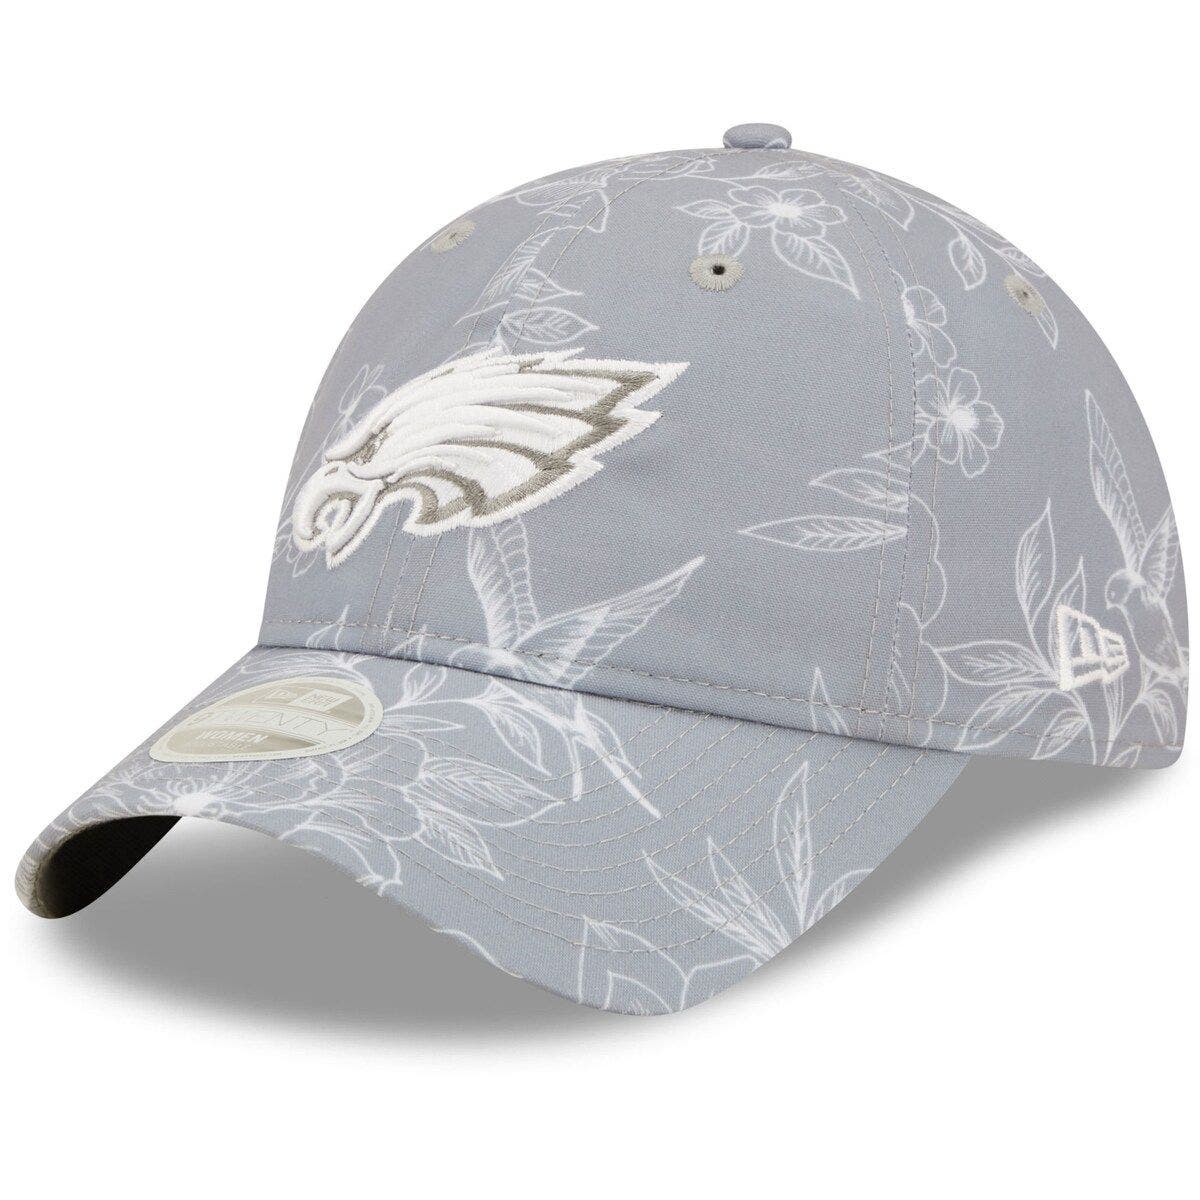 Eric Carl Newly Design Fashion Solid Visor Caps Best Tennis Hat